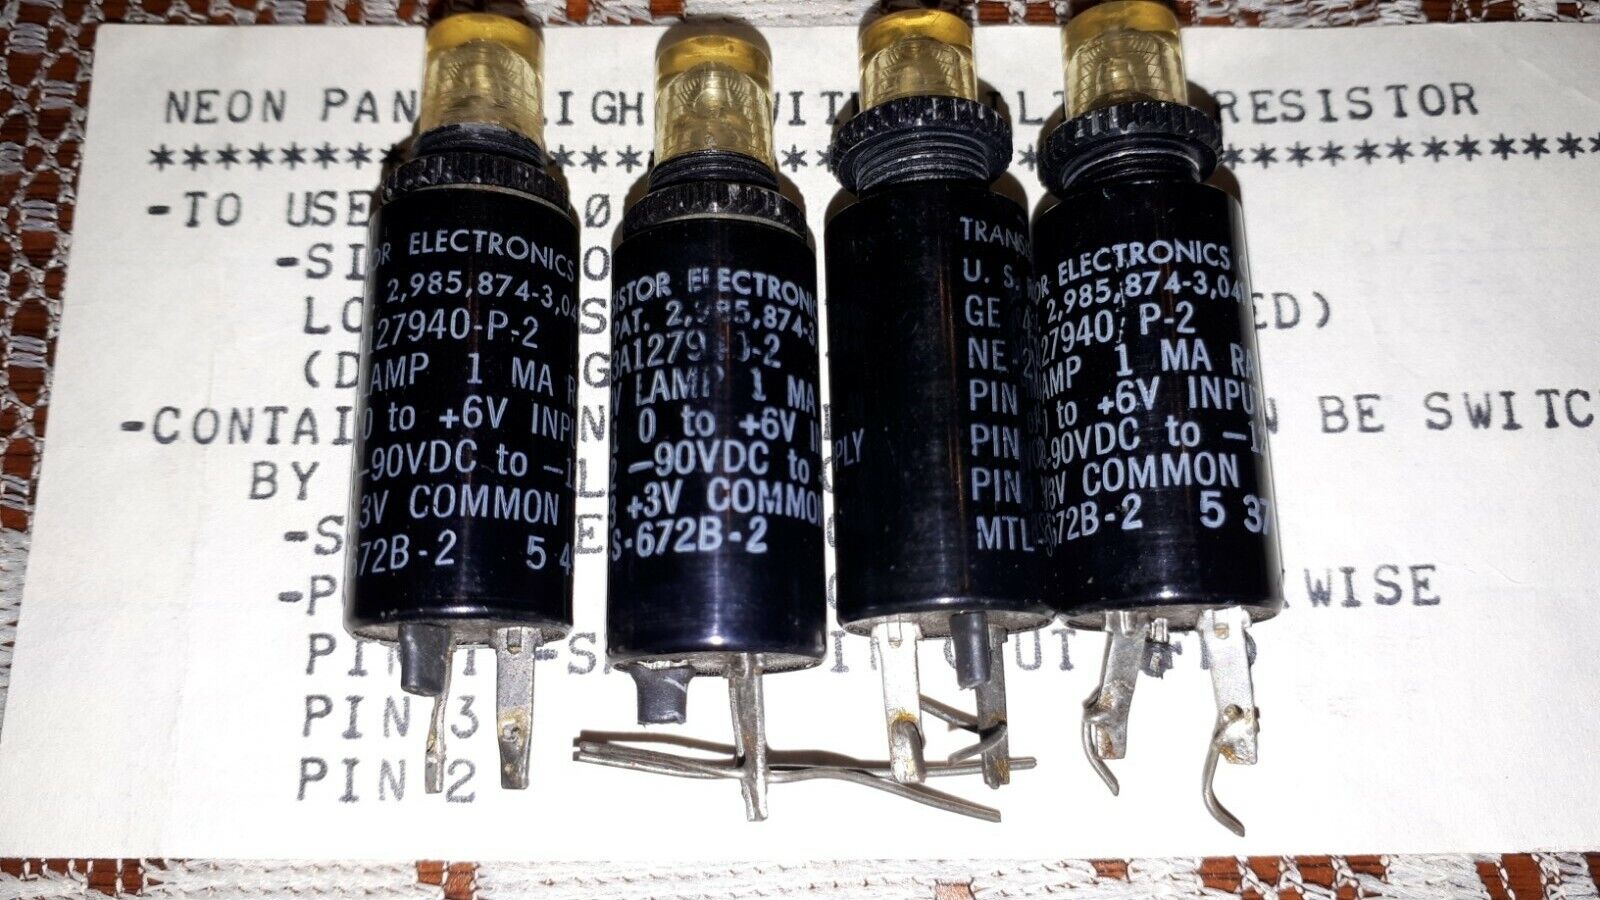 Transistor Electronics Corp Neon Panel Lights Displays Vintage Electronics